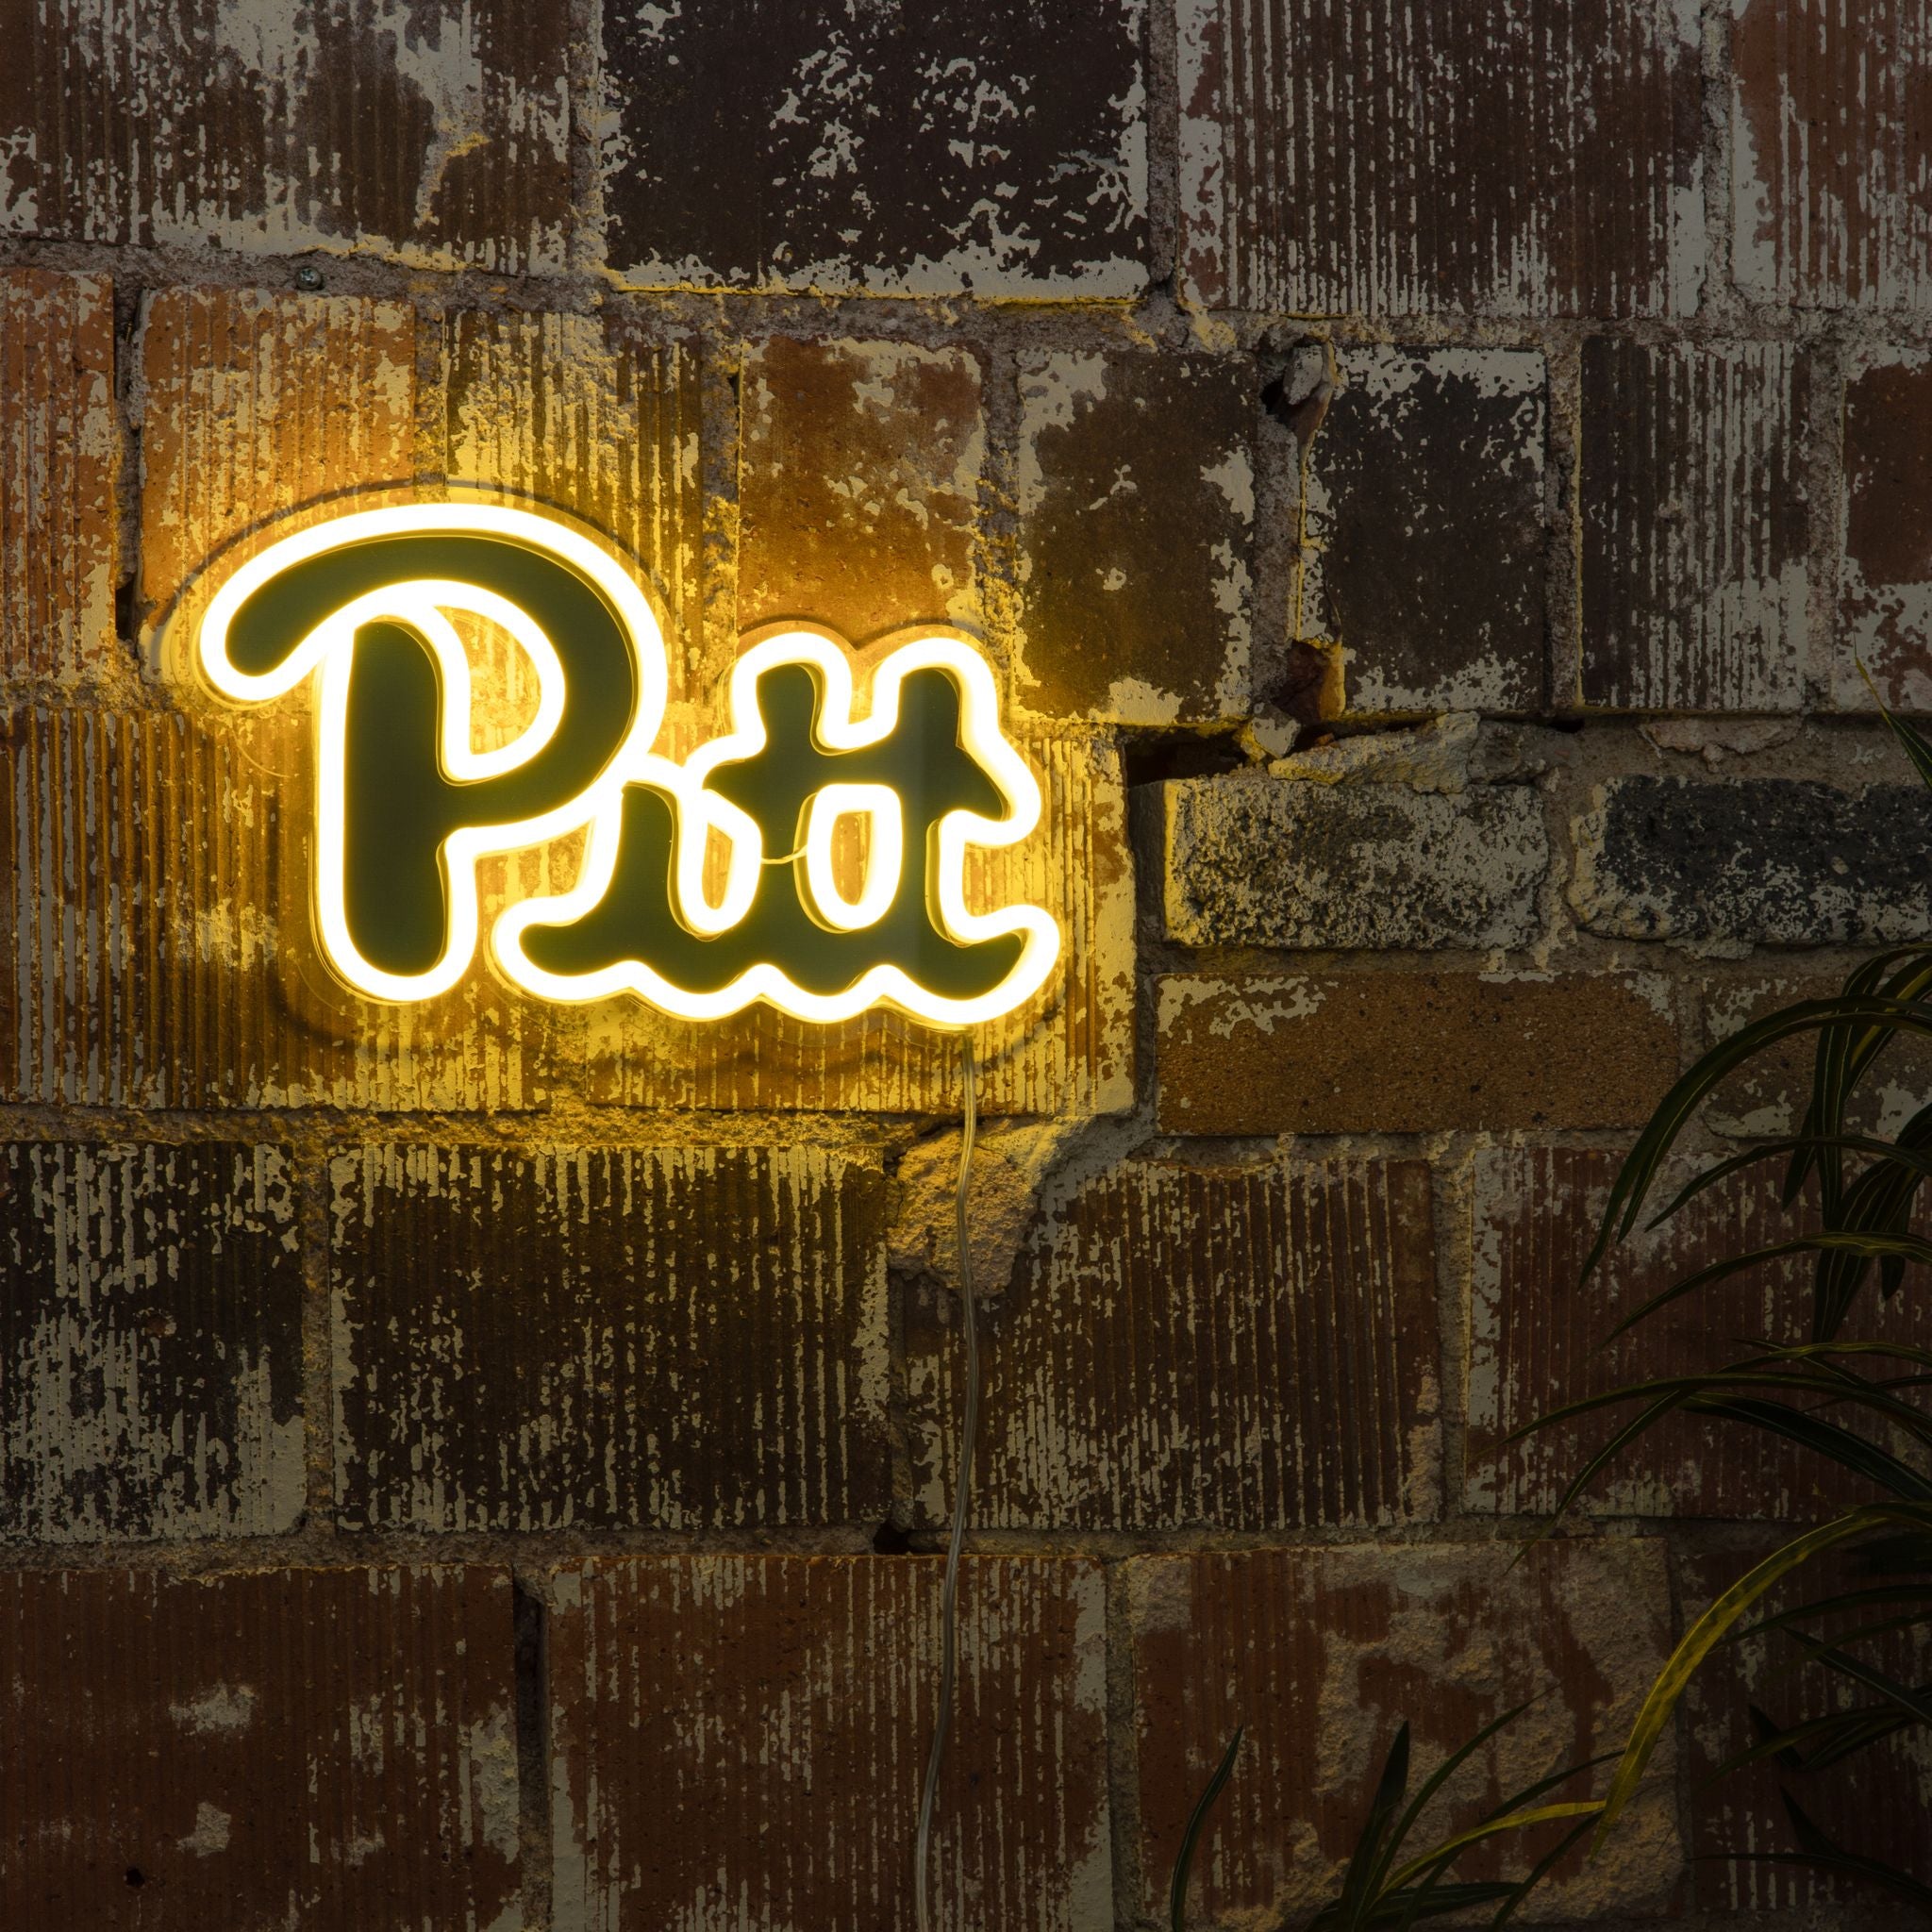 Pitt Logo Neon Sign - Saturday Neon